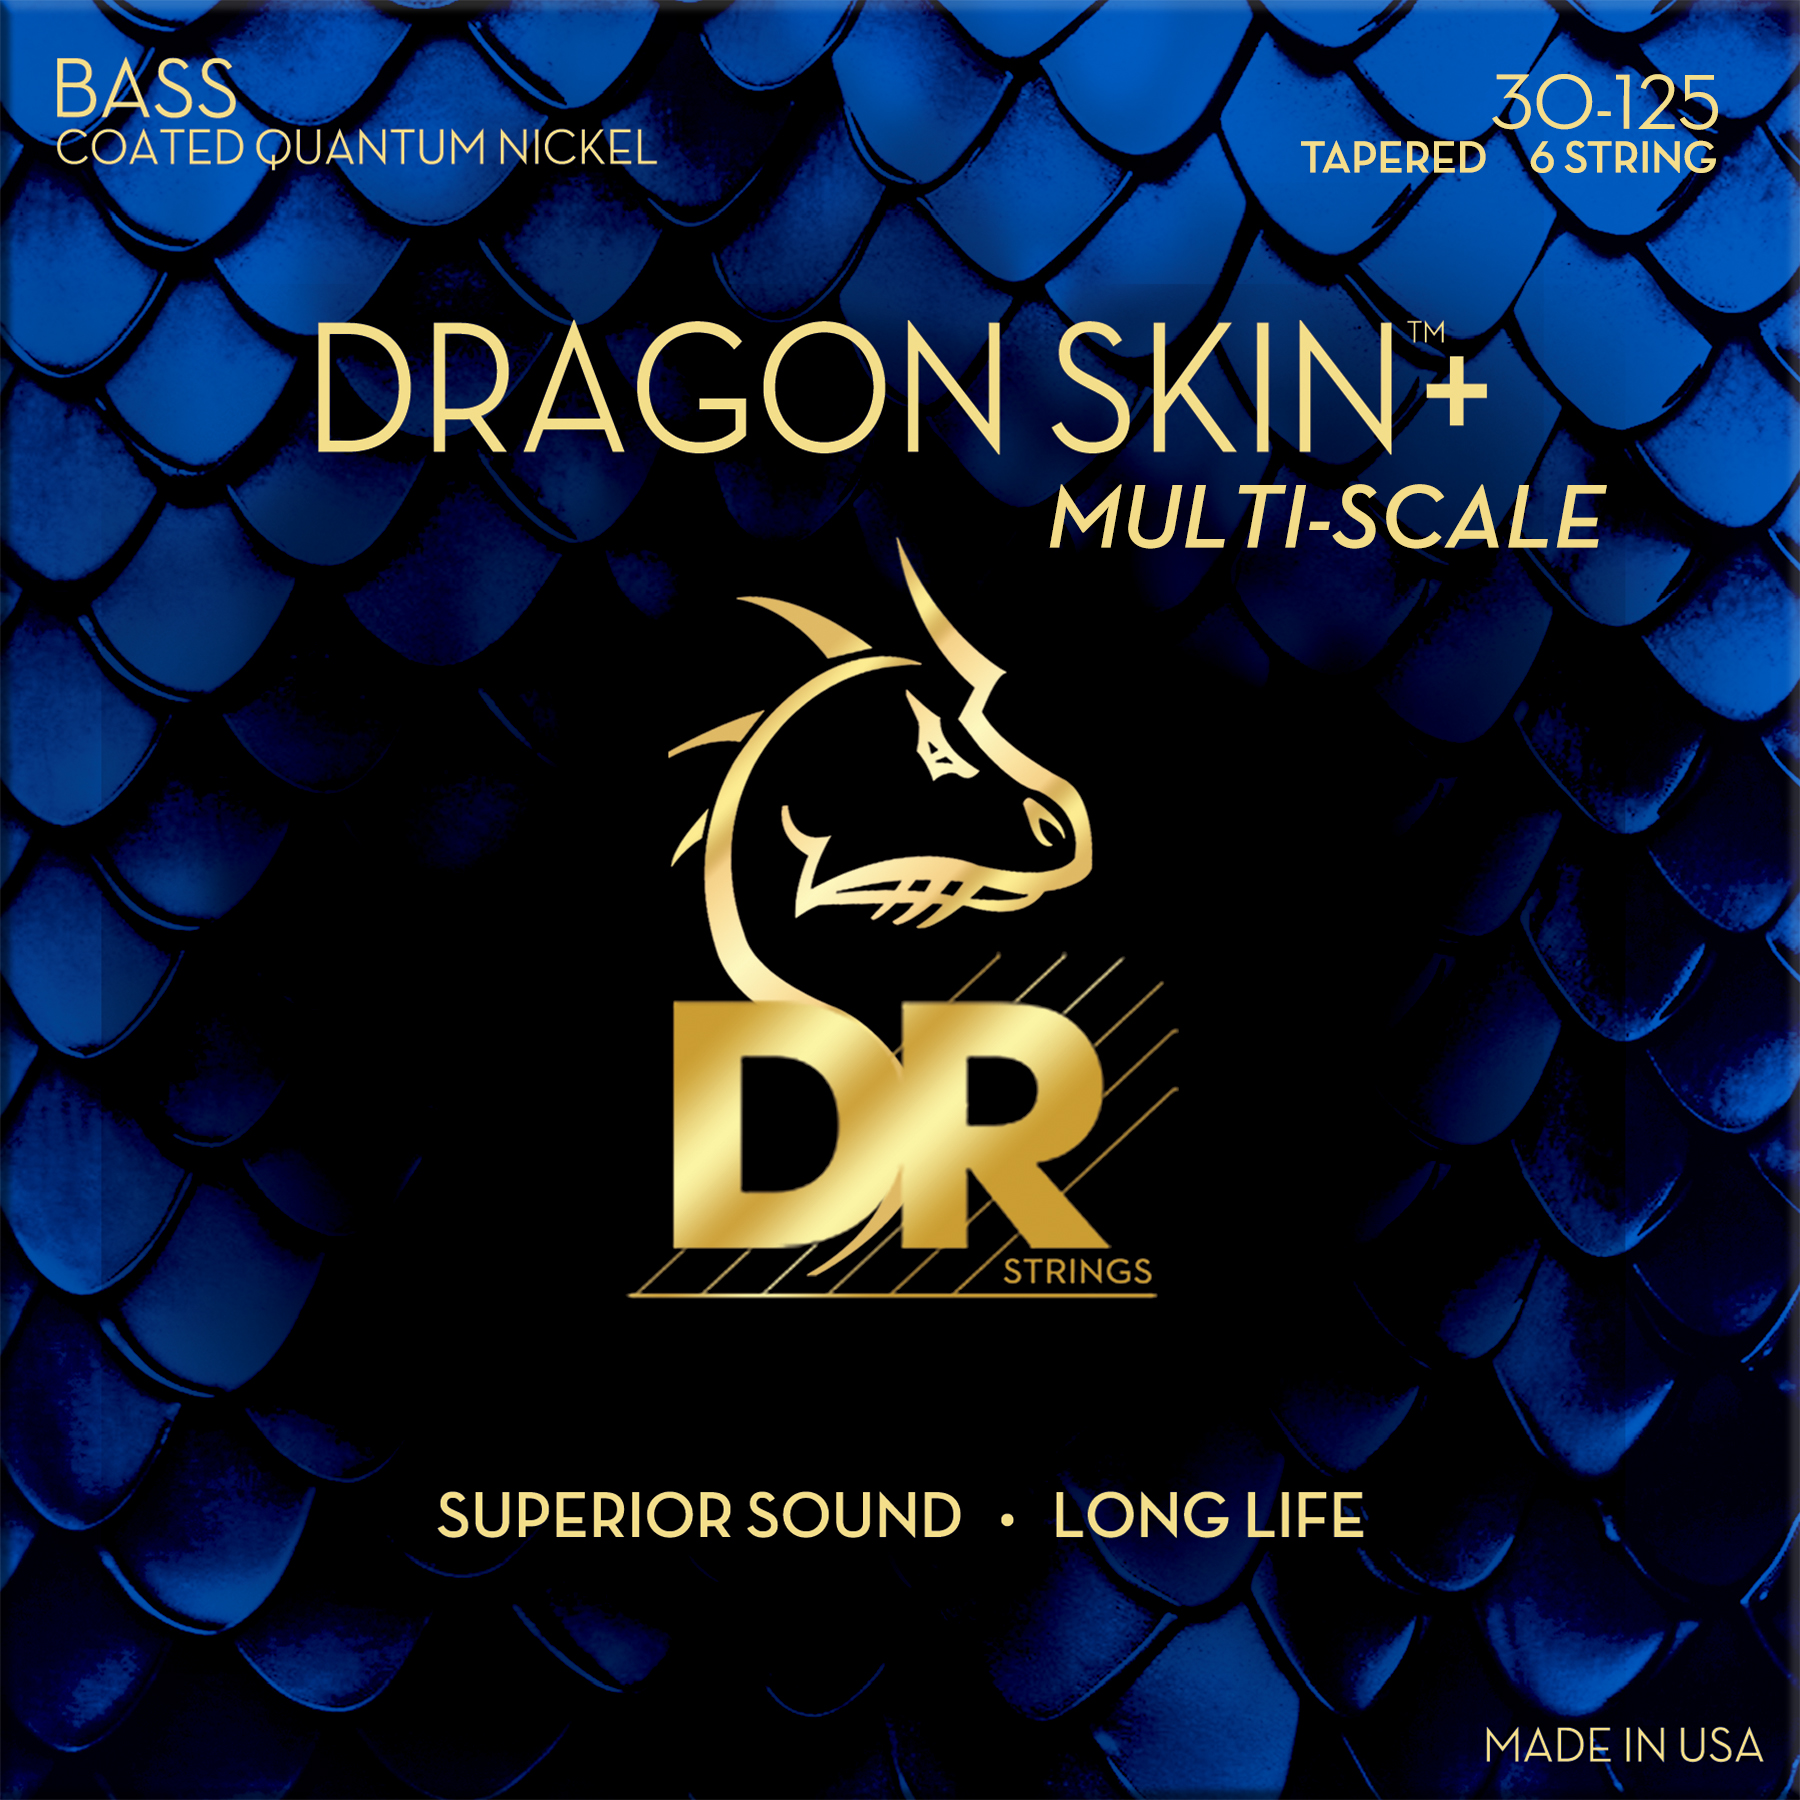 DR Strings DR Dragon Skin+ Quantum Nickel Electric Bass Strings Multi-Scale Set - 6-String 30-125t DBQM6-30